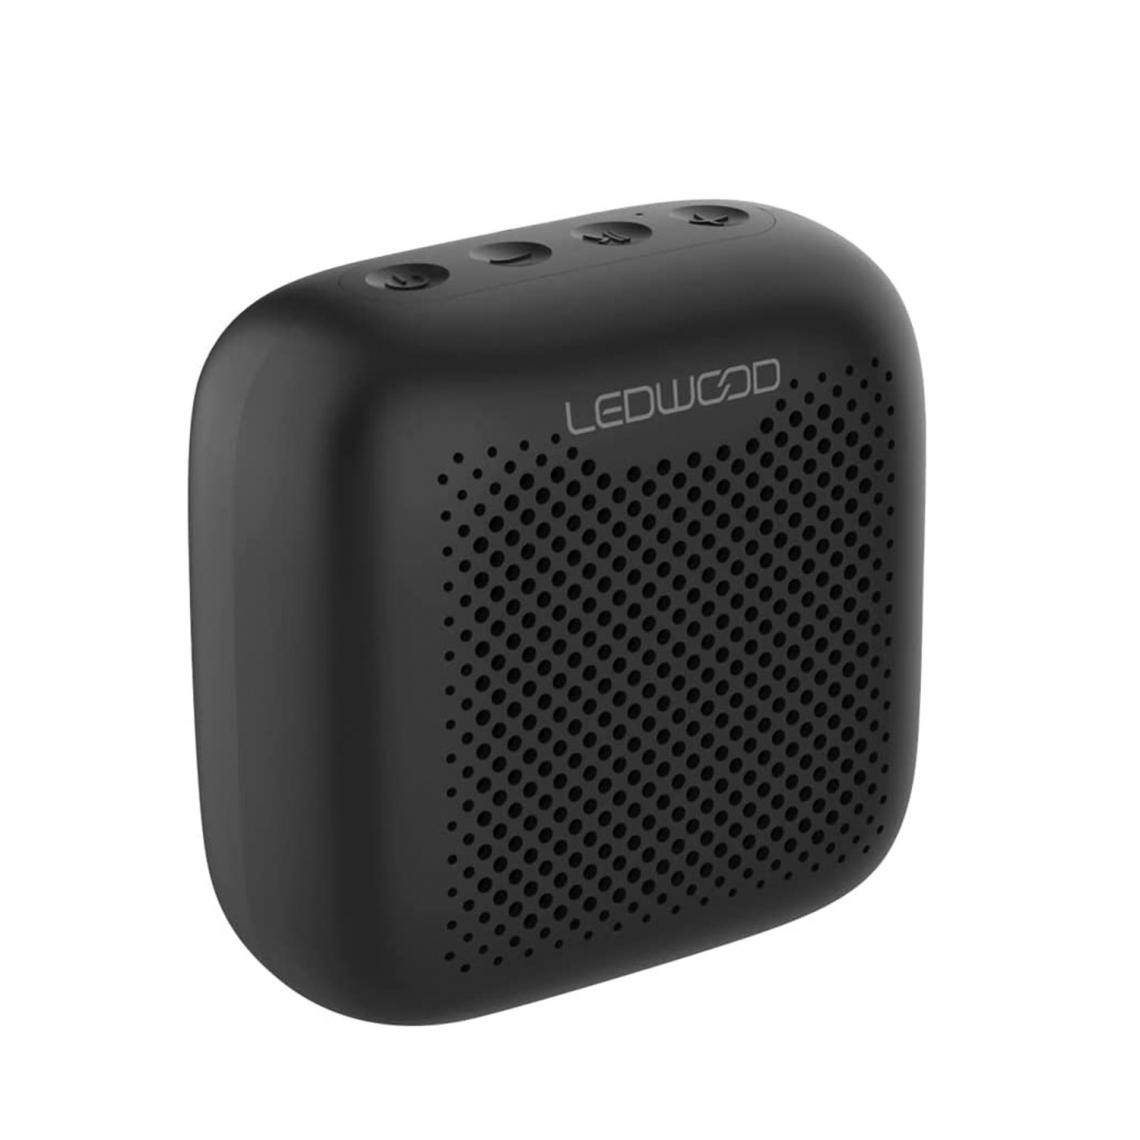 Audio & Hi-Fi Ledwood: Round300 Record Player Bluetooth In/Out Speakers Black NUOVO SIGILLATO SUBITO DISPONIBILE